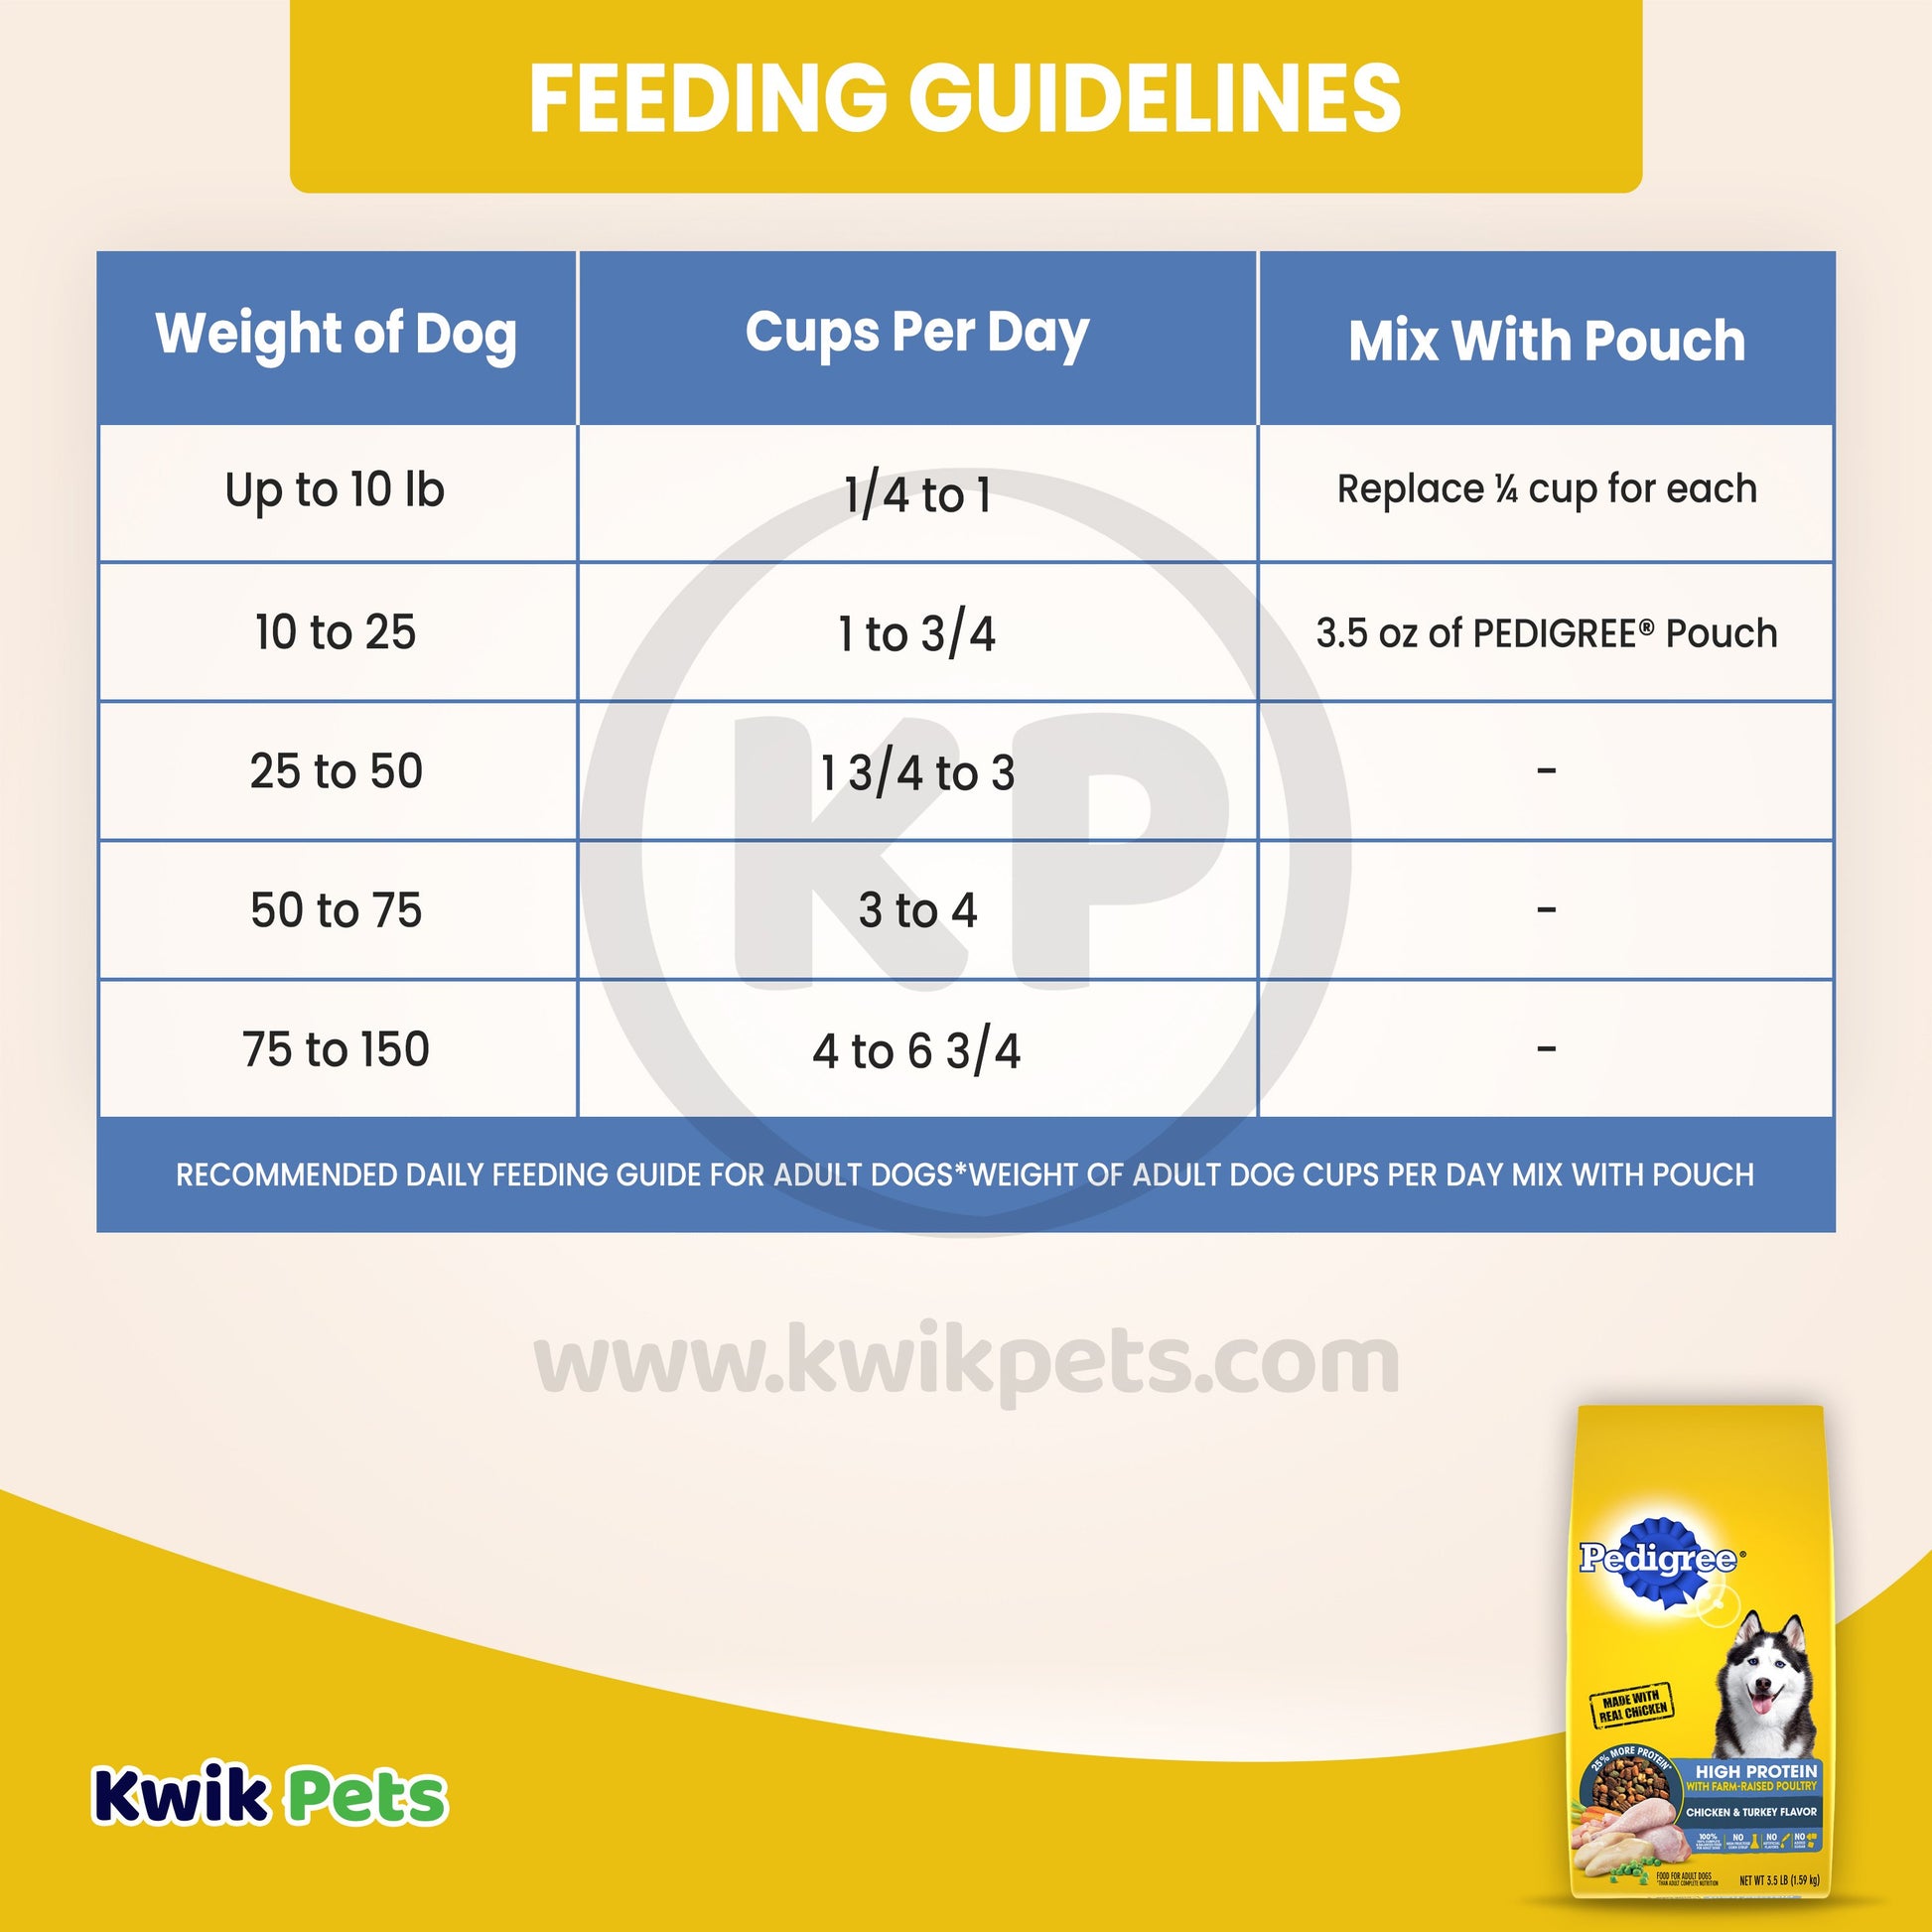 Pedigree High Protein Adult Dry Dog Food w/Farm-Raised Poultry Chicken & Turkey, 3.5 lb, Pedigree